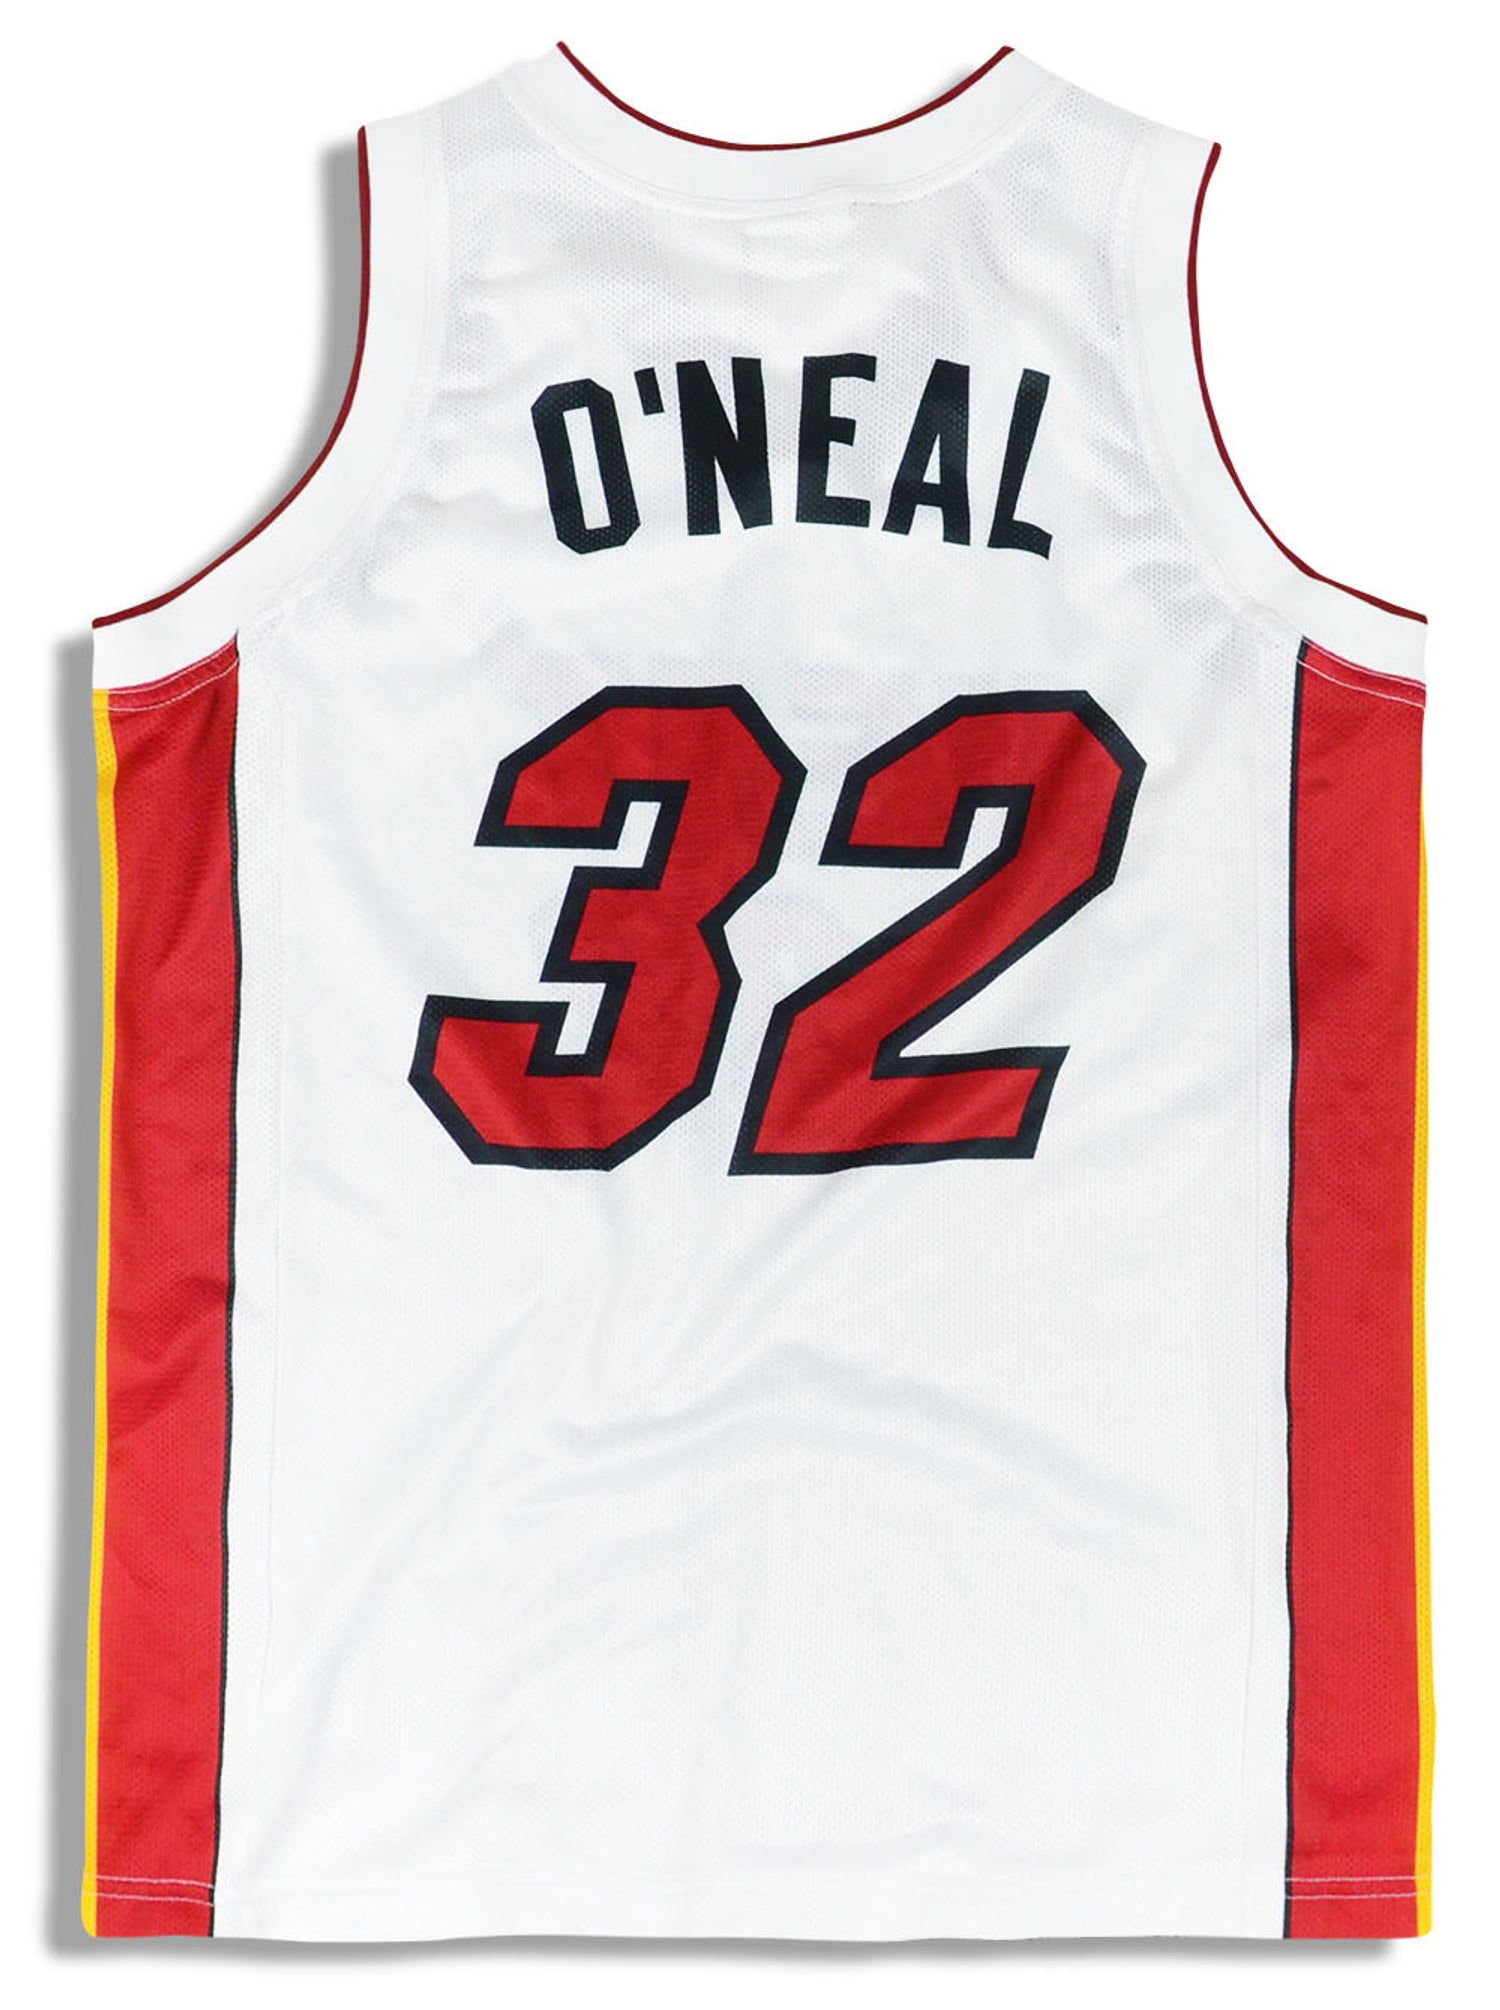 Nba Miami Heat Basketball Jersey #32 Shaq Oneil As-is